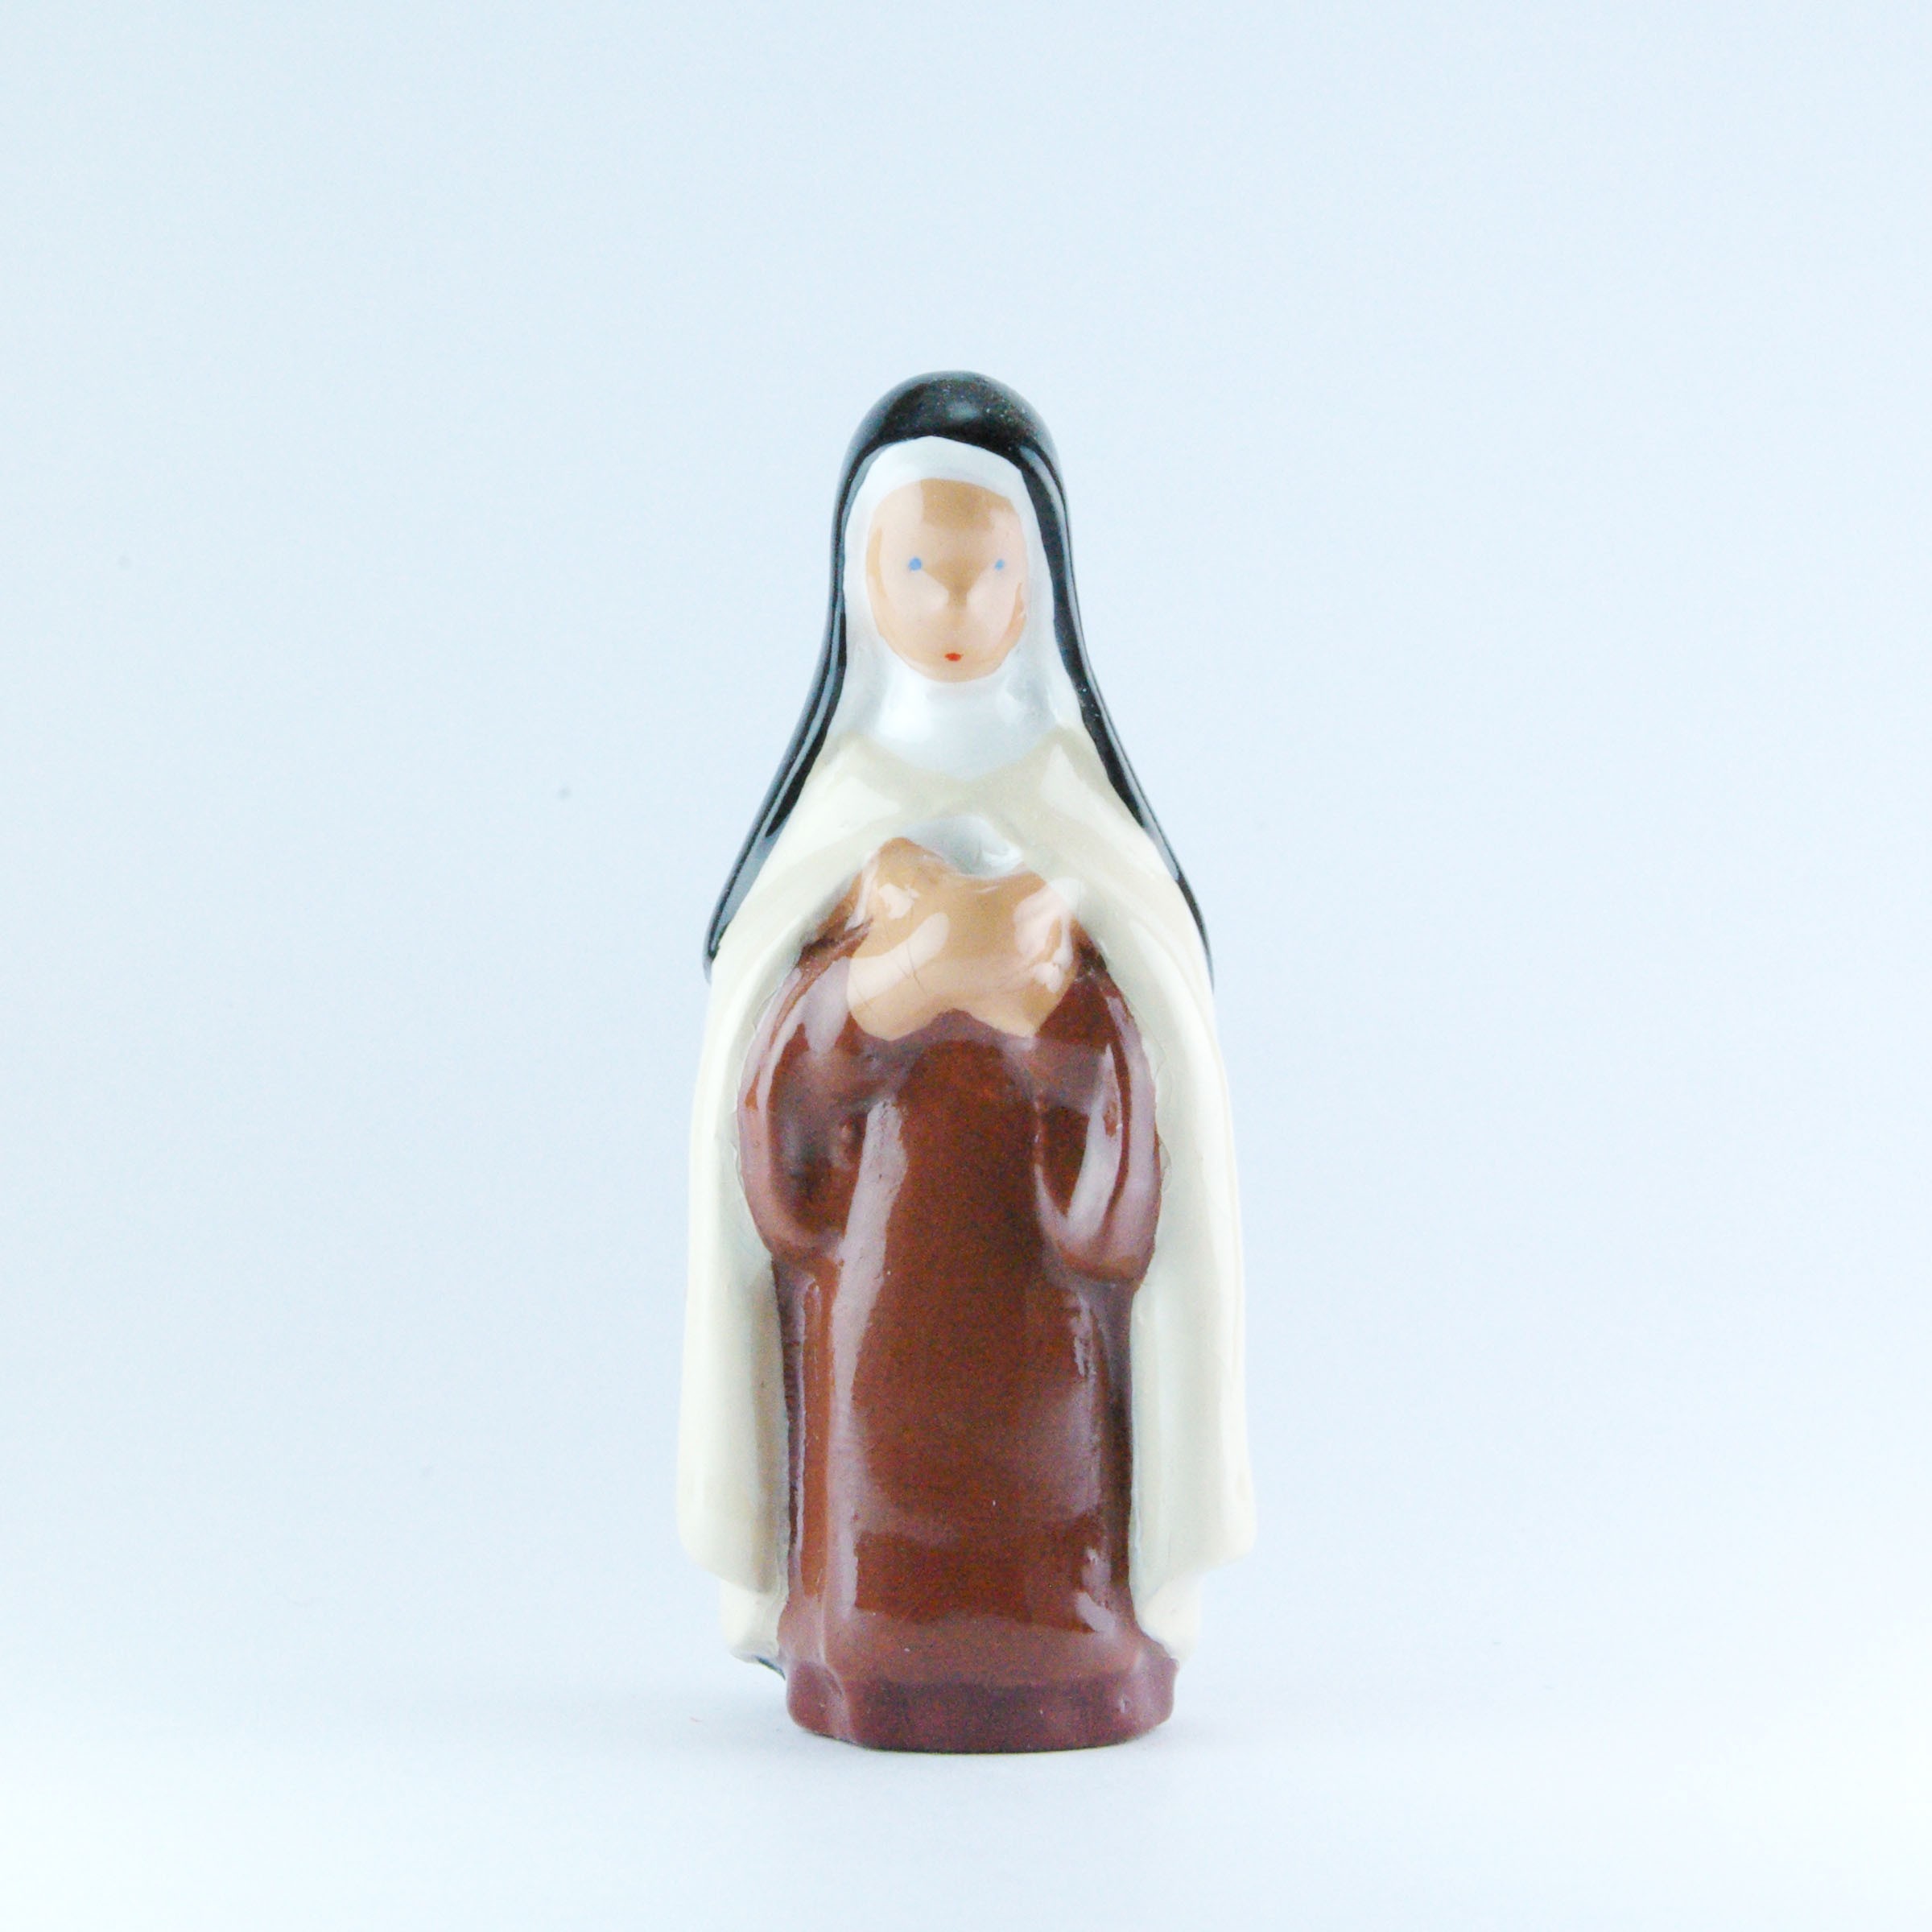 Sainte Elisabeth de la Trinité